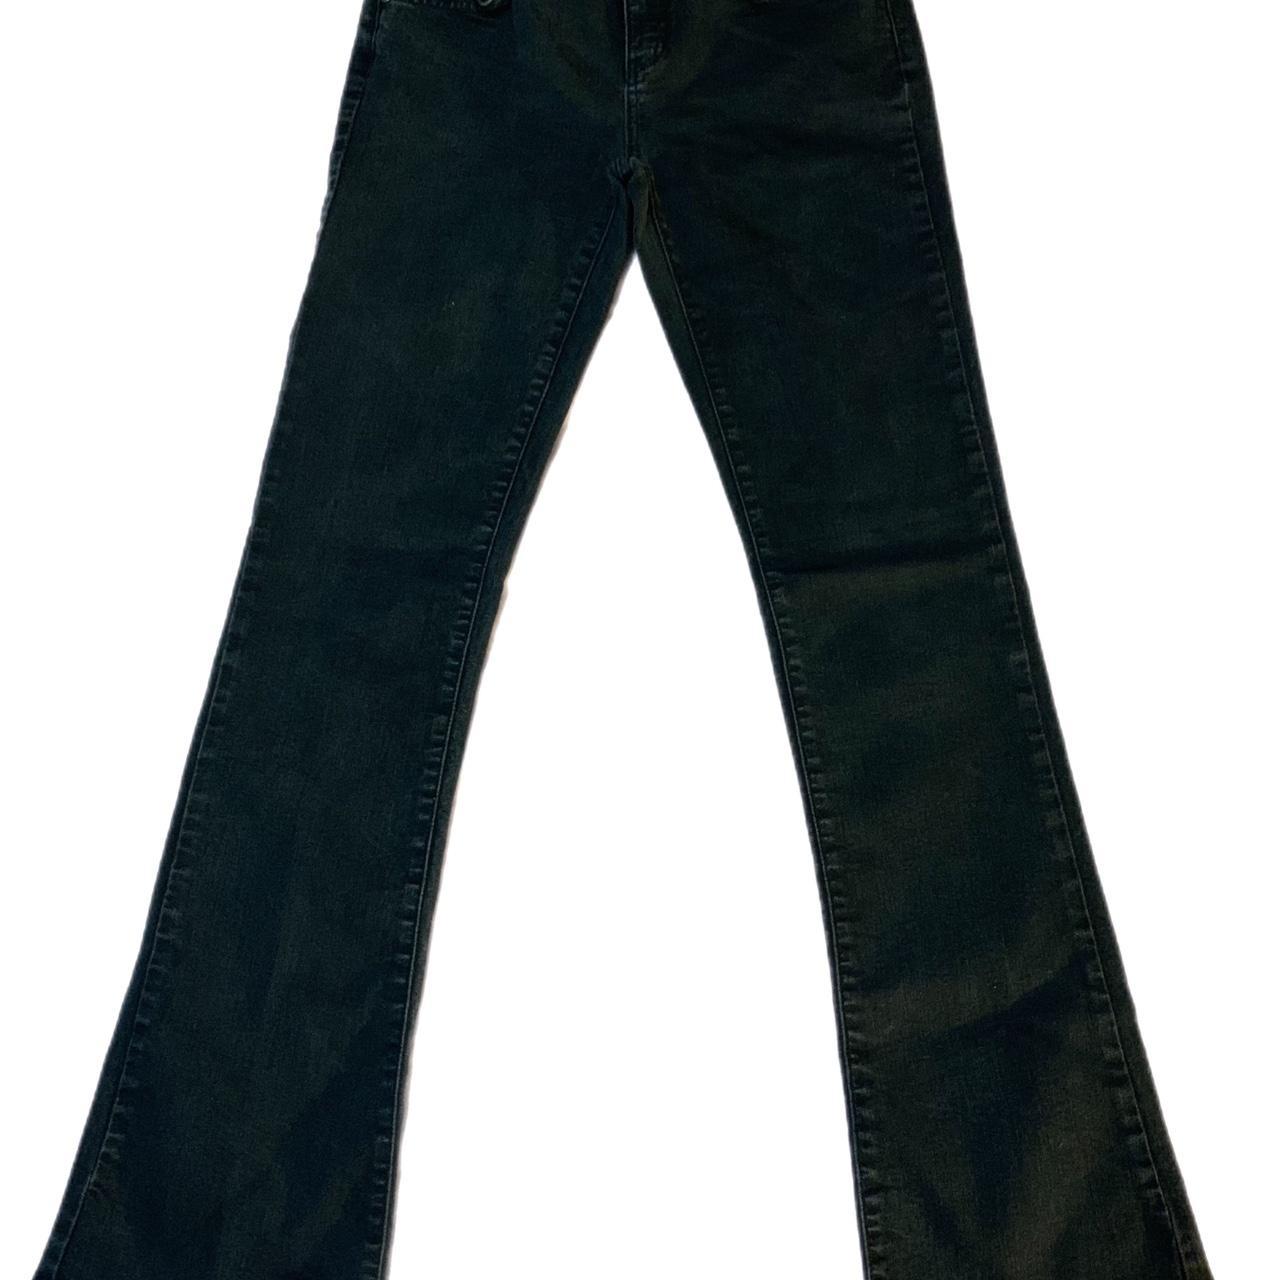 Simply Vera Vera Wang skinny bootcut jeans. Great